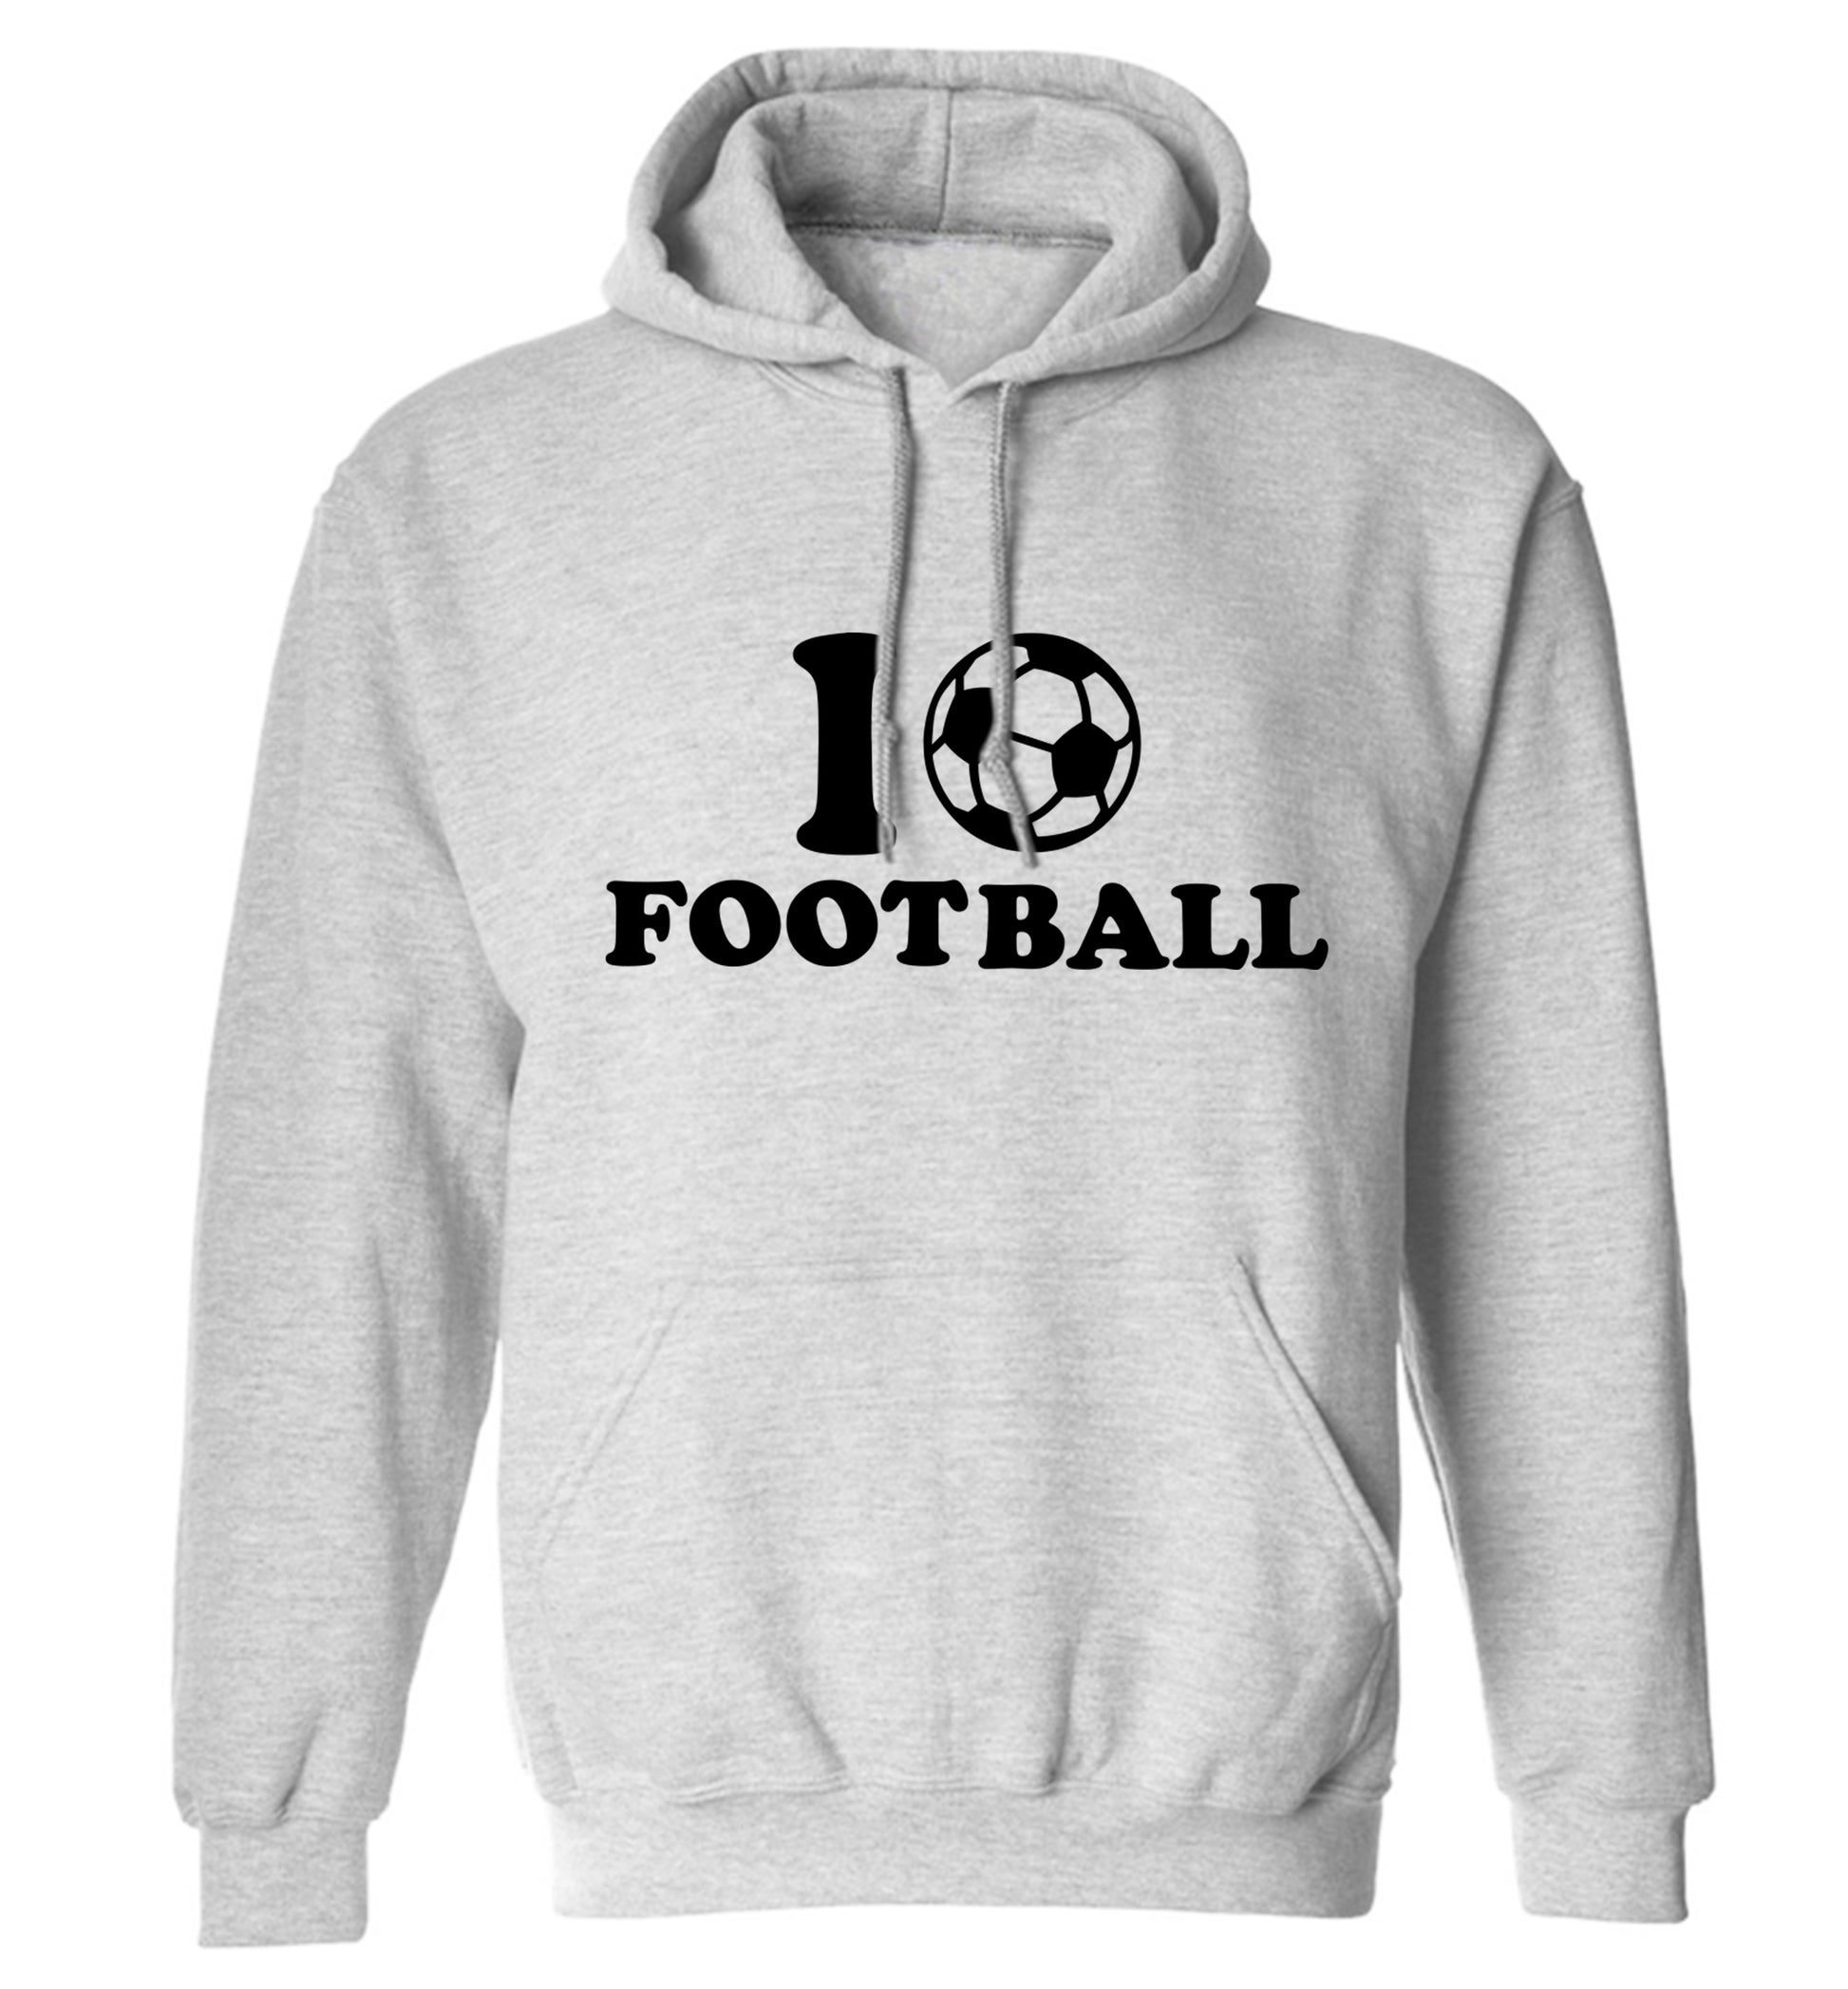 I love football adults unisexgrey hoodie 2XL